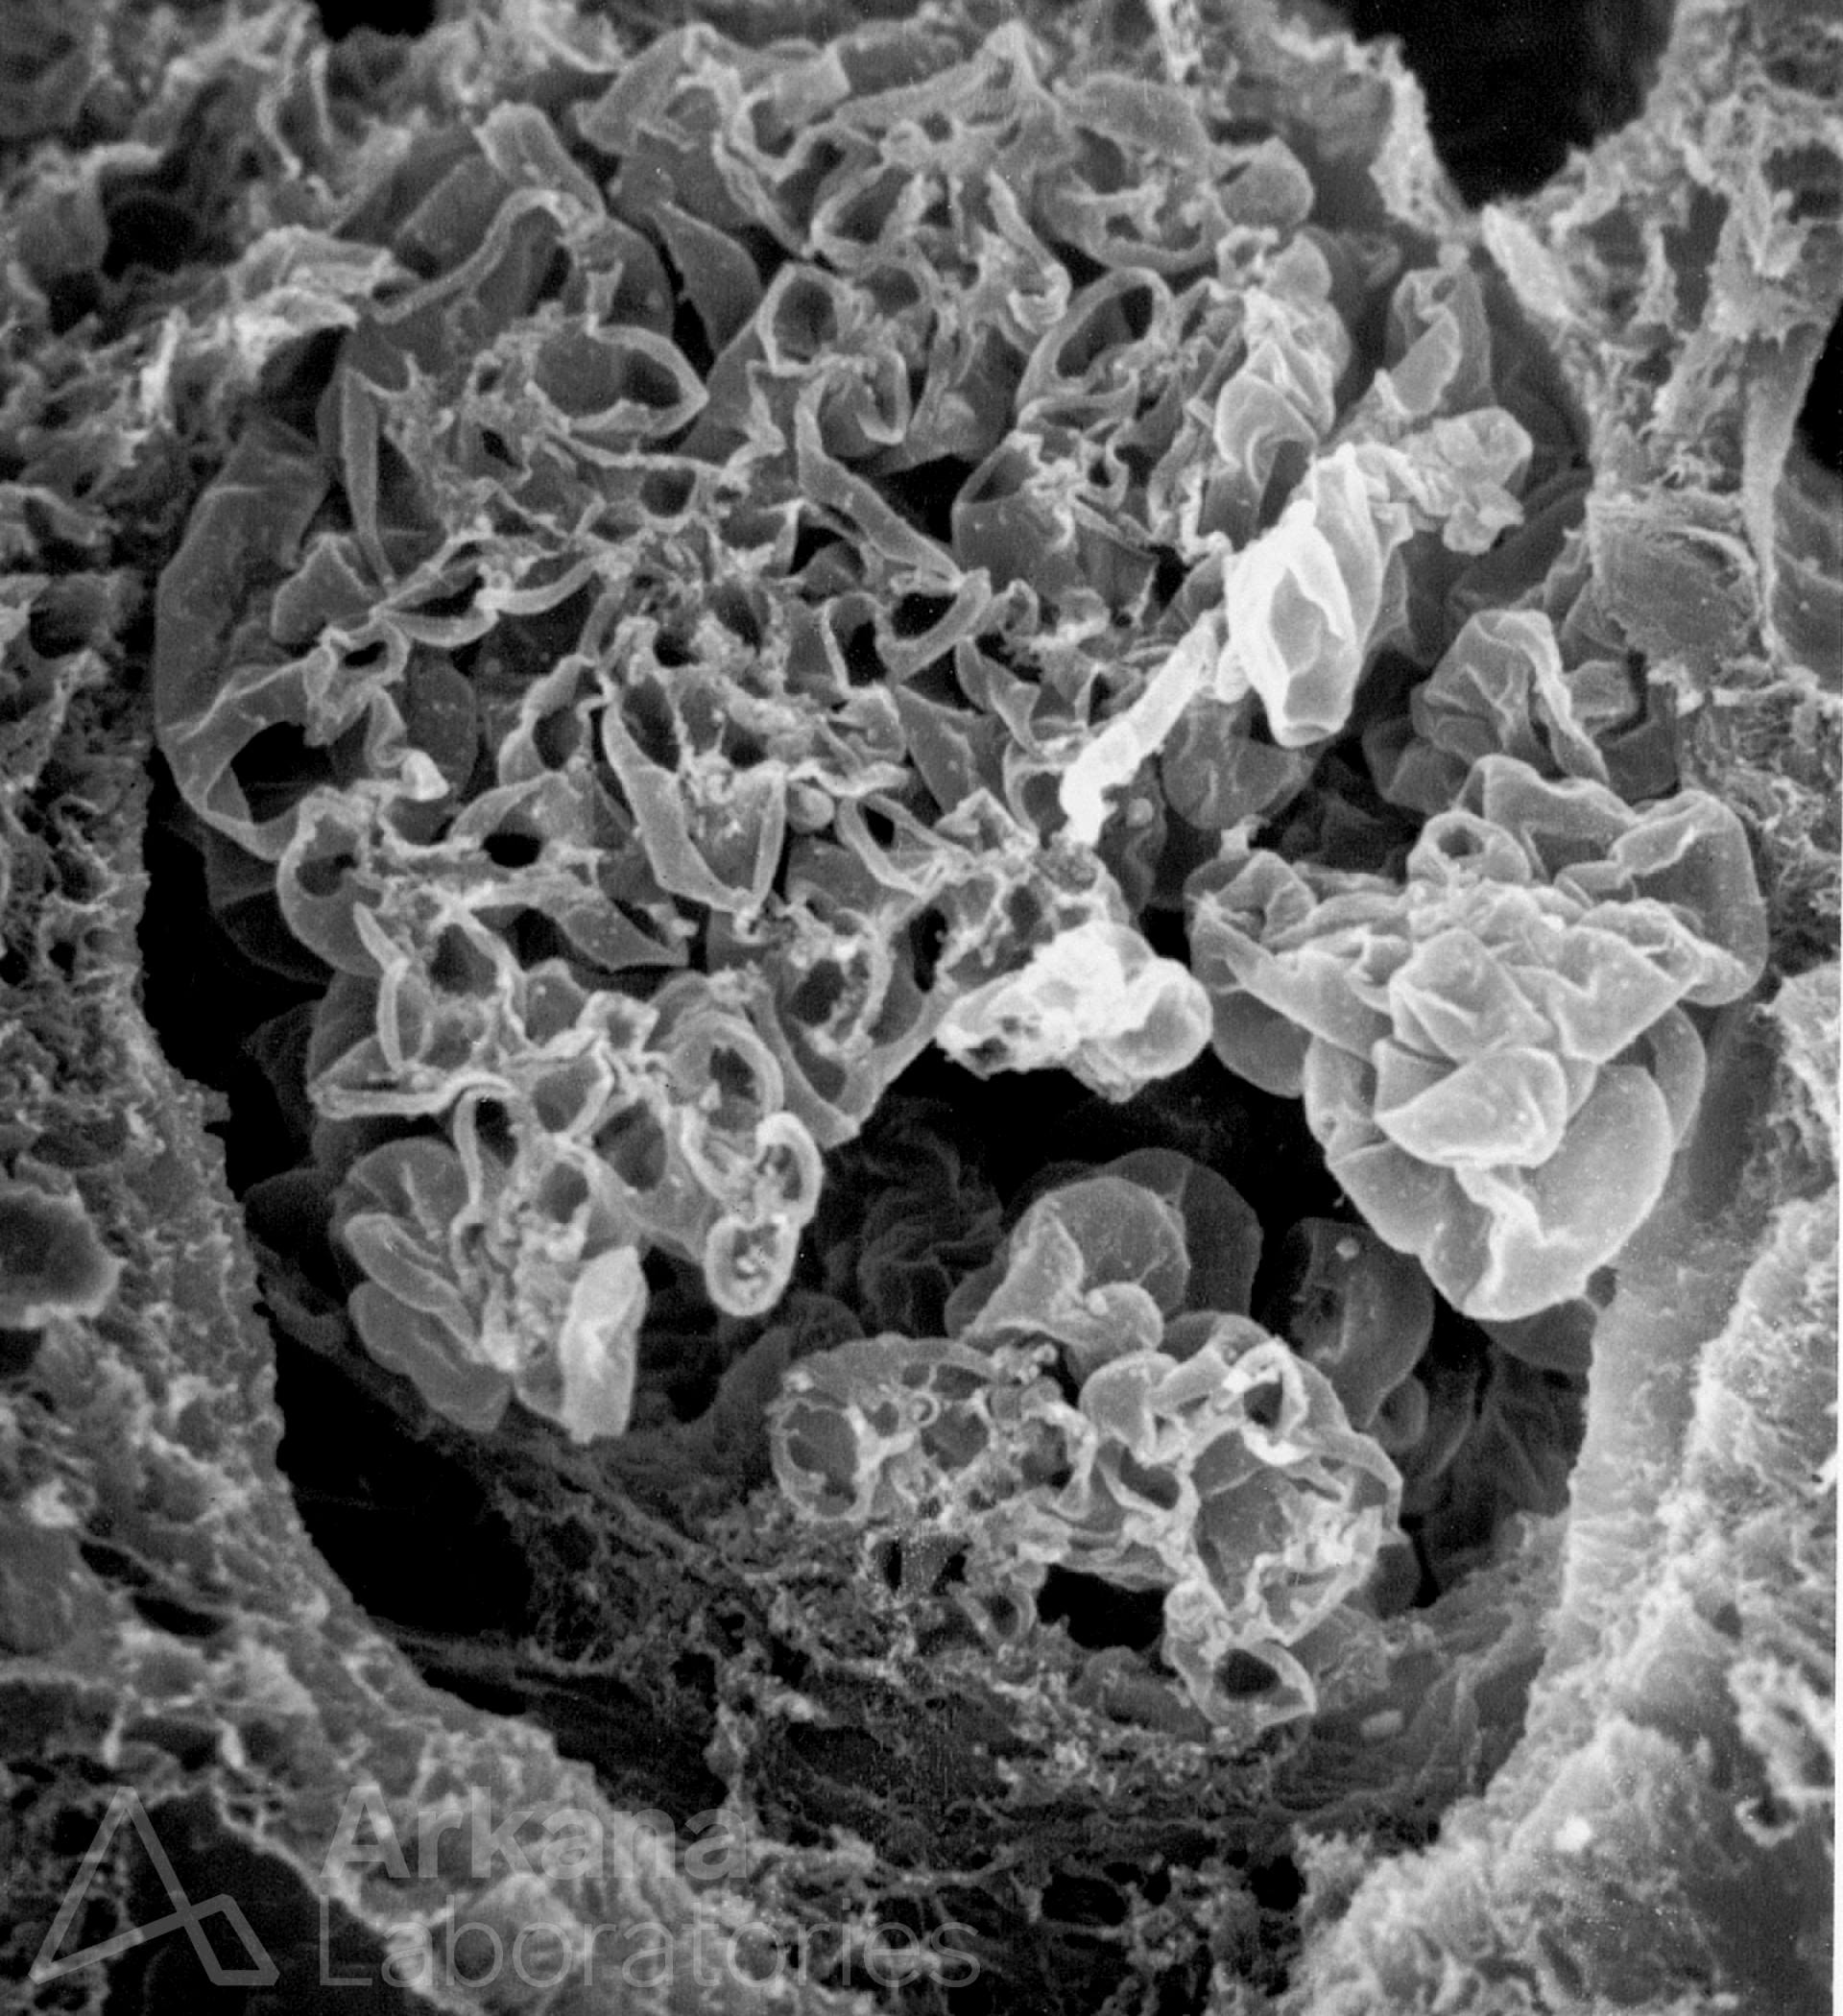 glomerulus showing a fibrocellular crescent